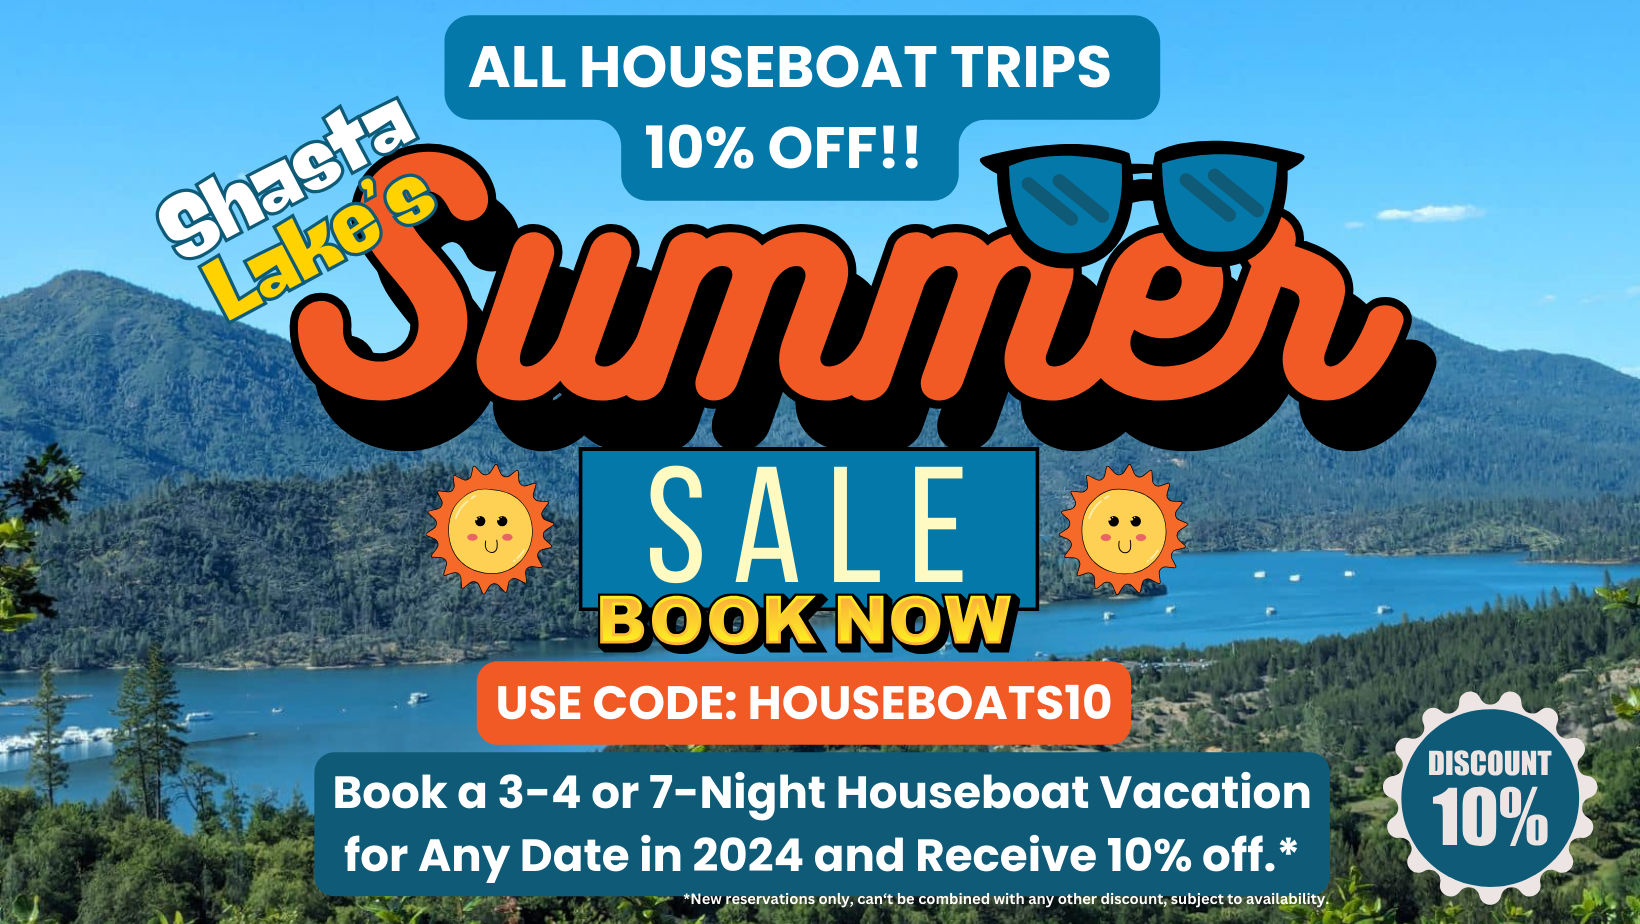 Lets Go to Shasta Lake Houseboats.com